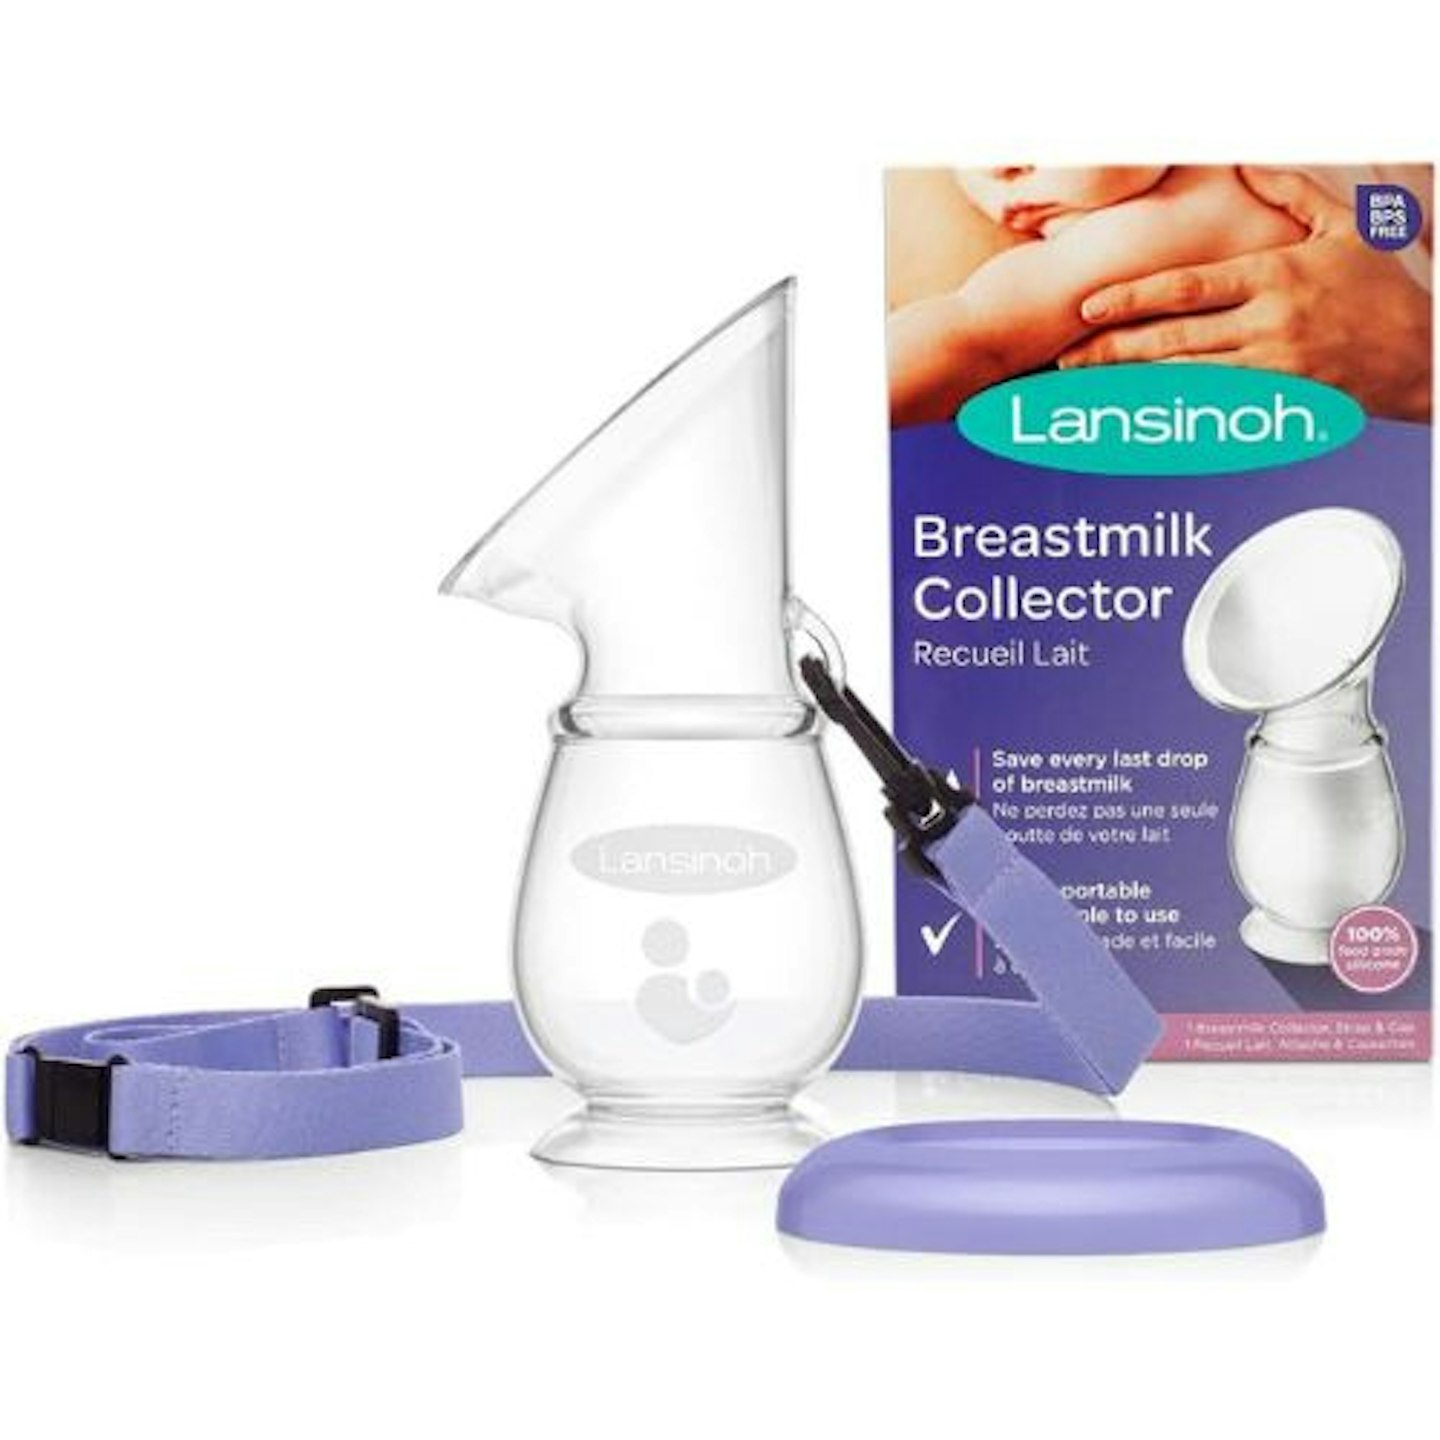 BPA Free Silicone Breast Pump Breast Collector Breast Pump - China